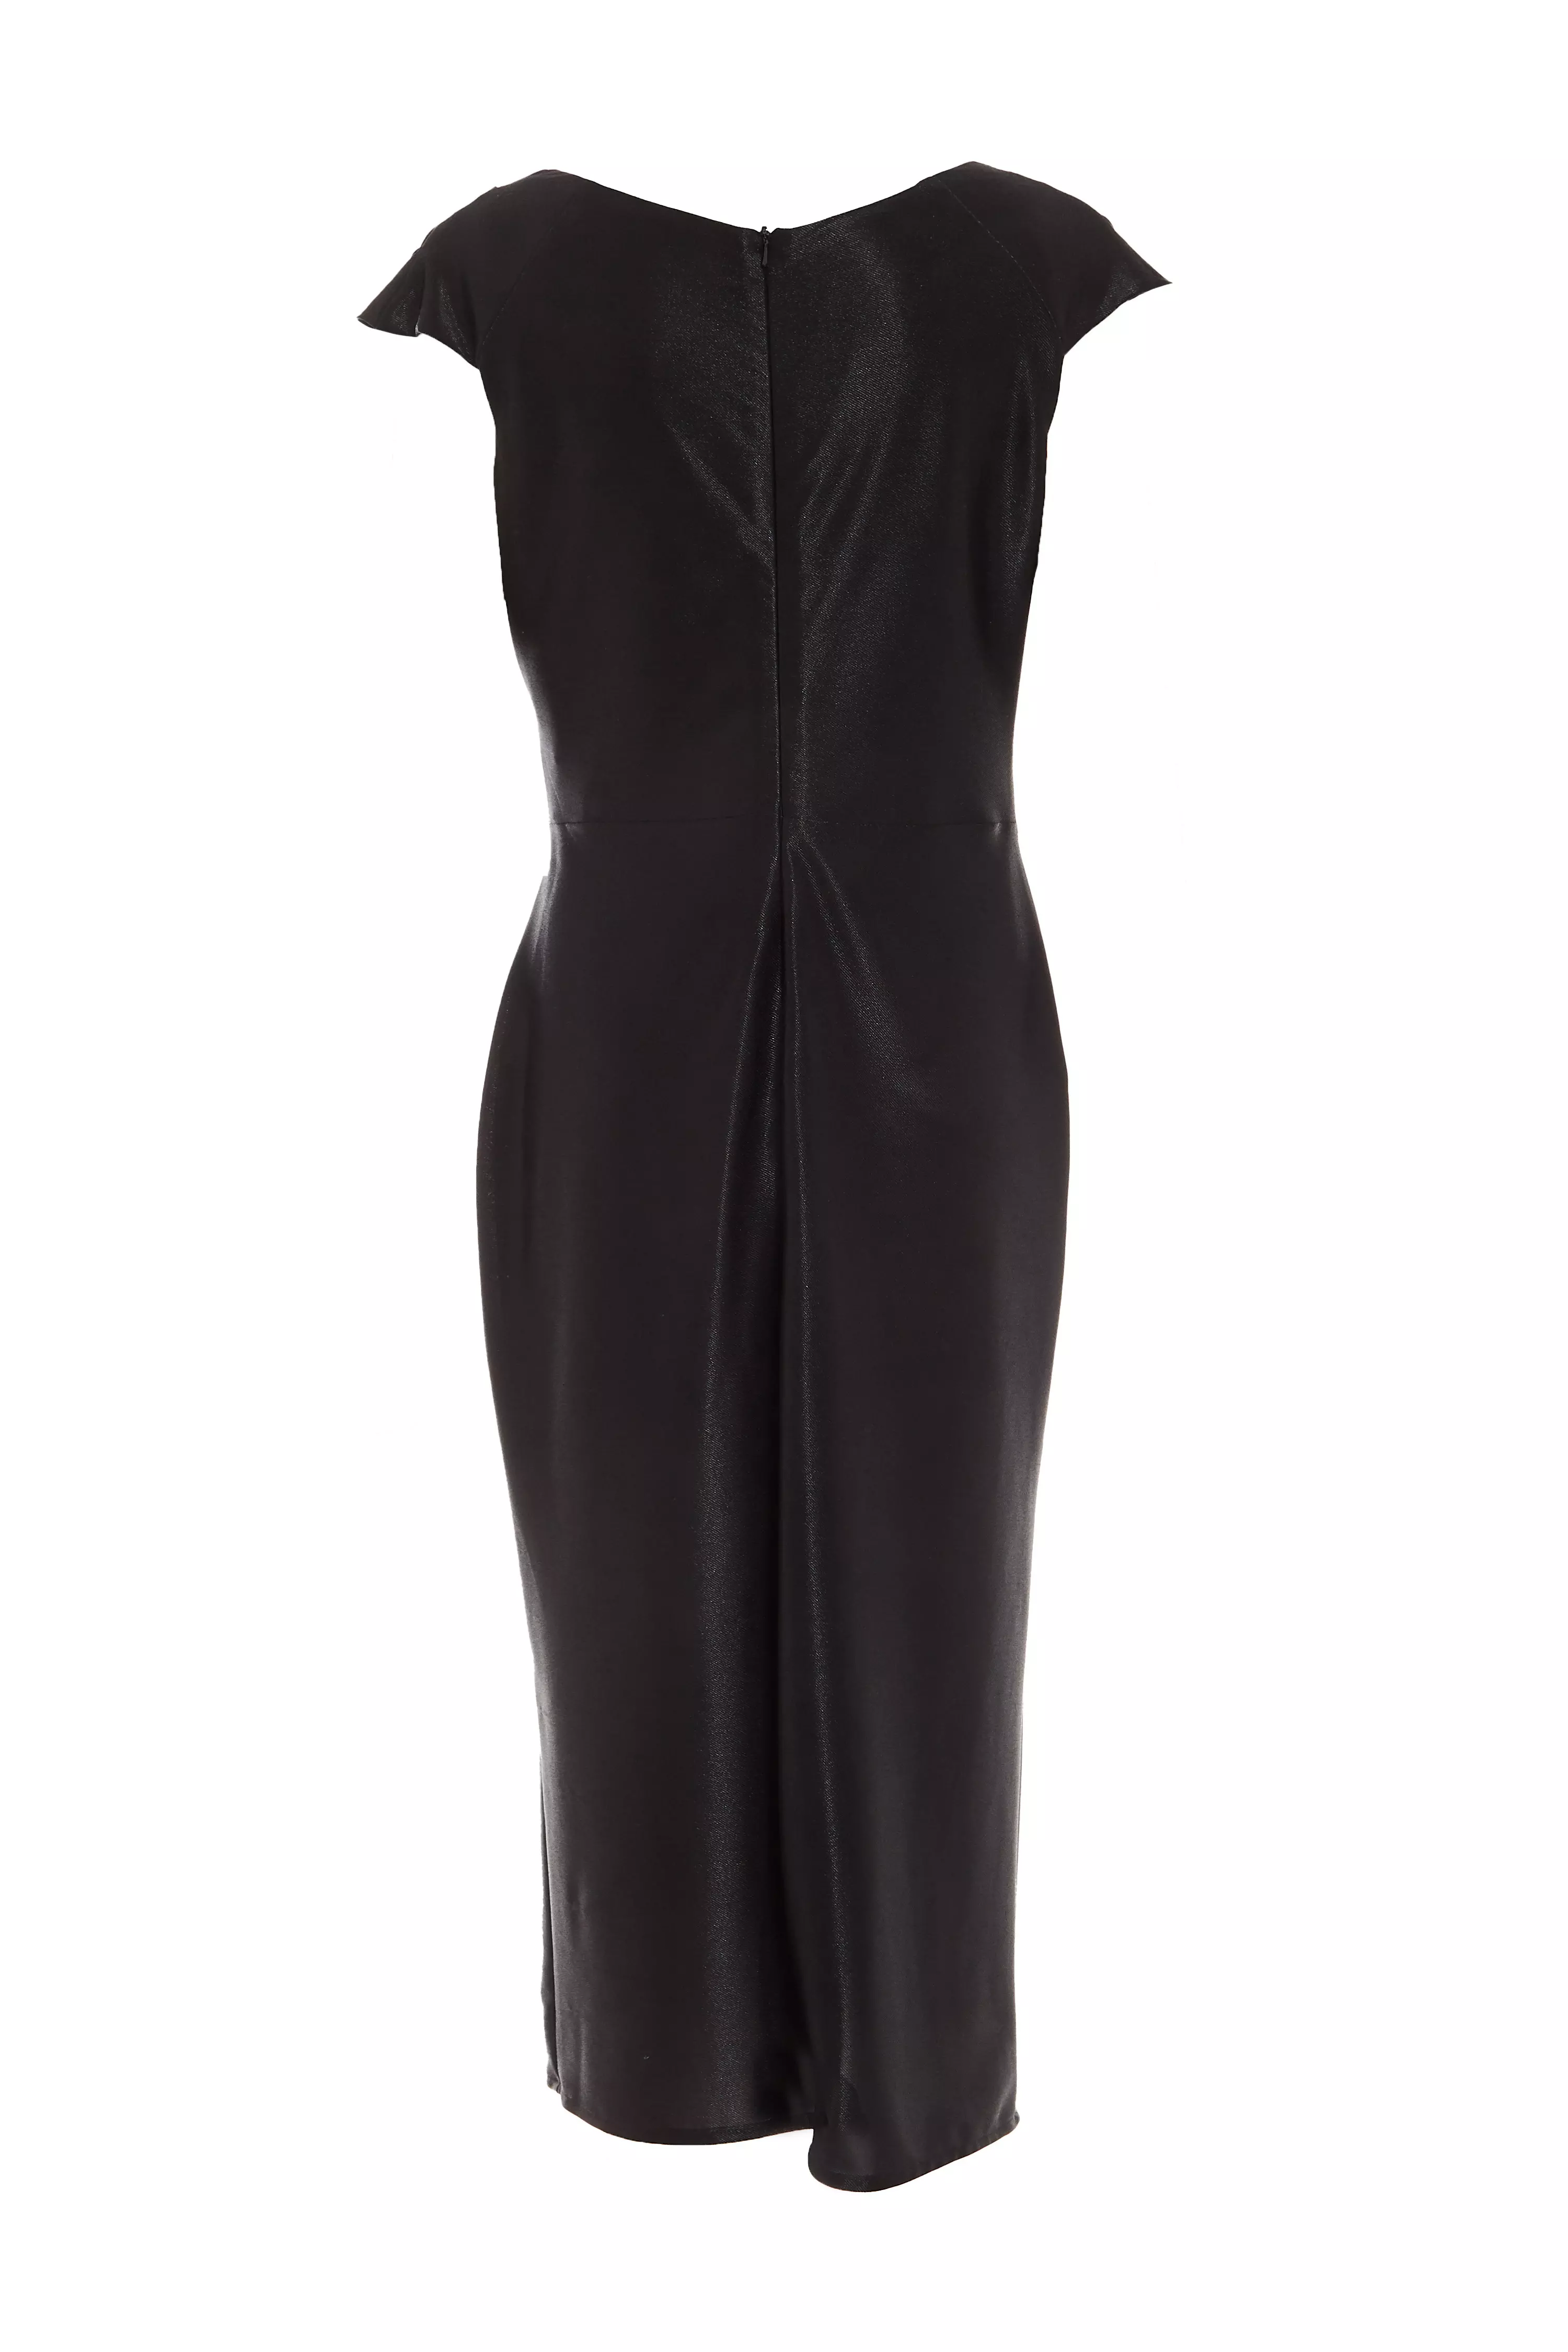 Black Ruched Midi Dress - QUIZ Clothing